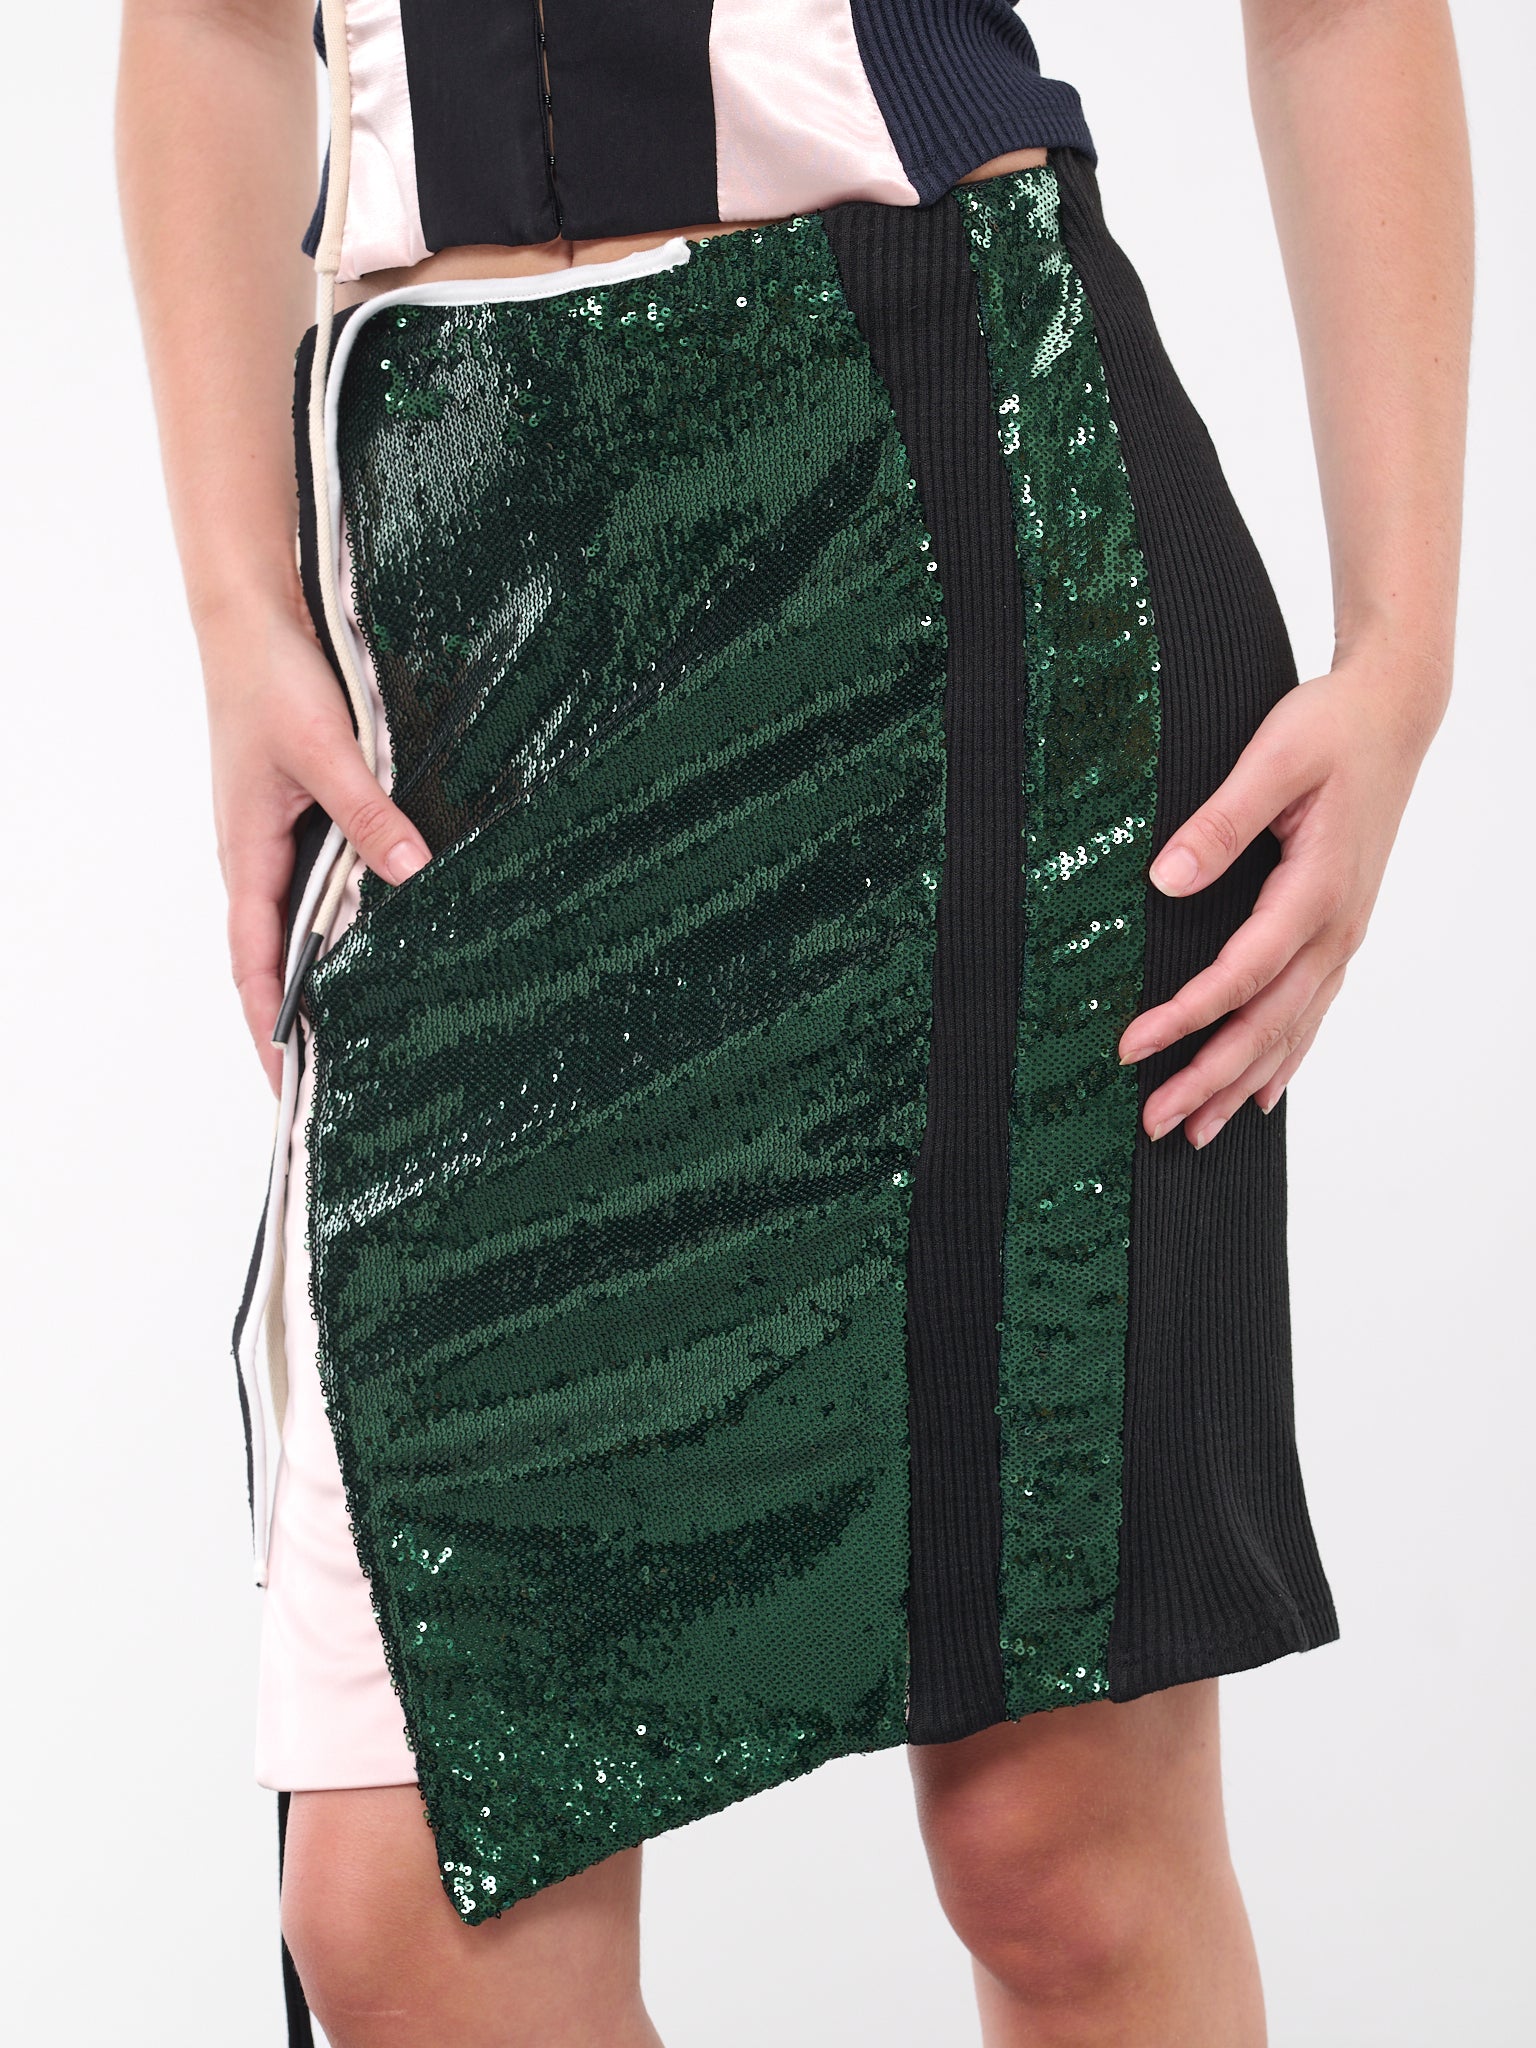 Deconstructed Skirt (406301-GRBK)